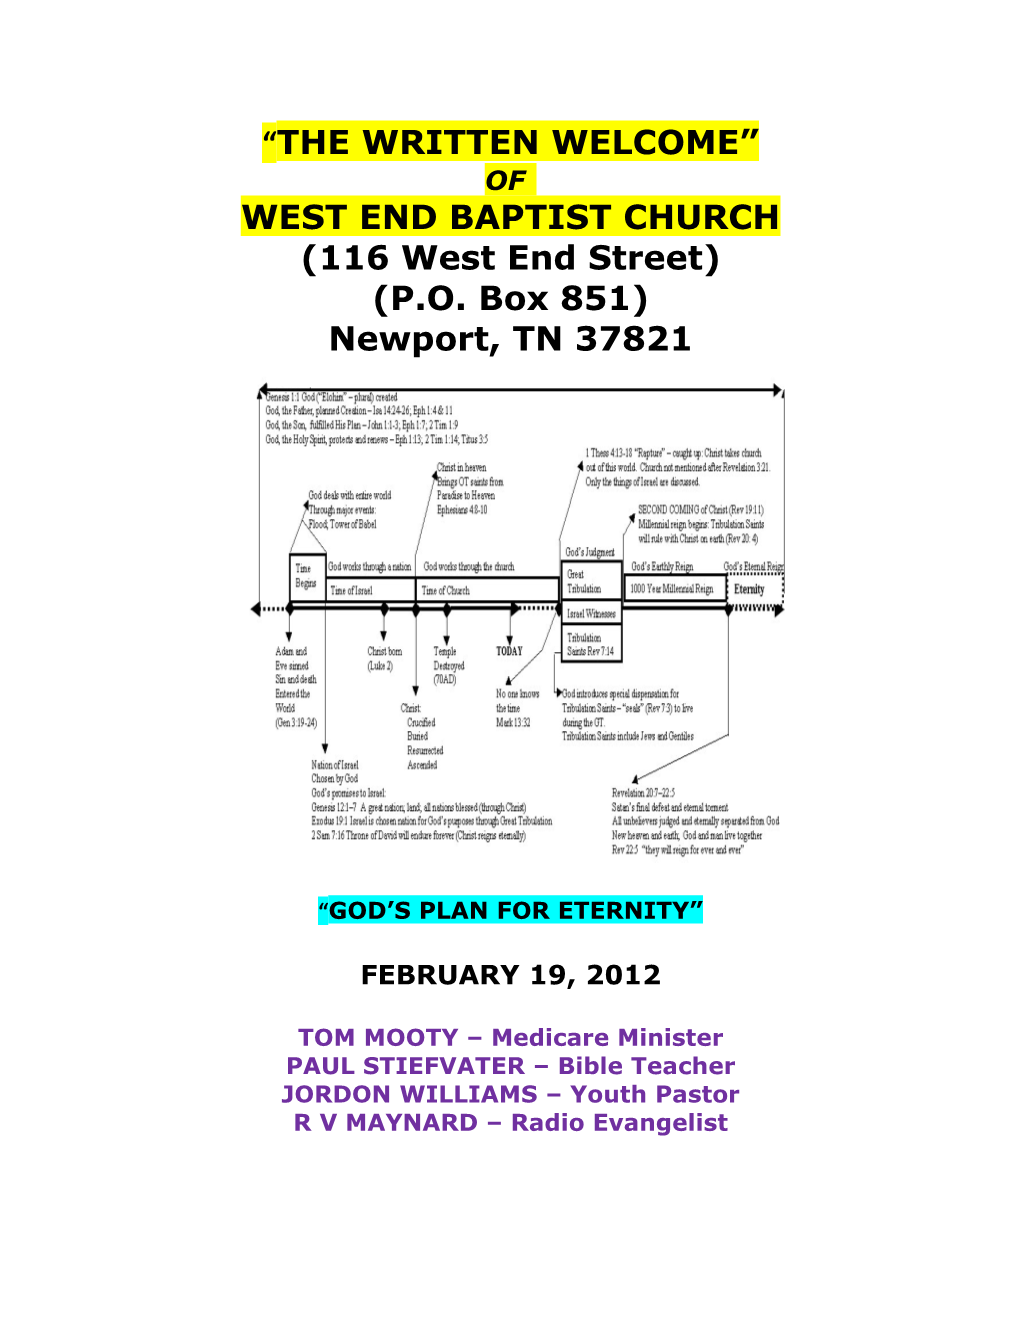 The West End Baptist Church